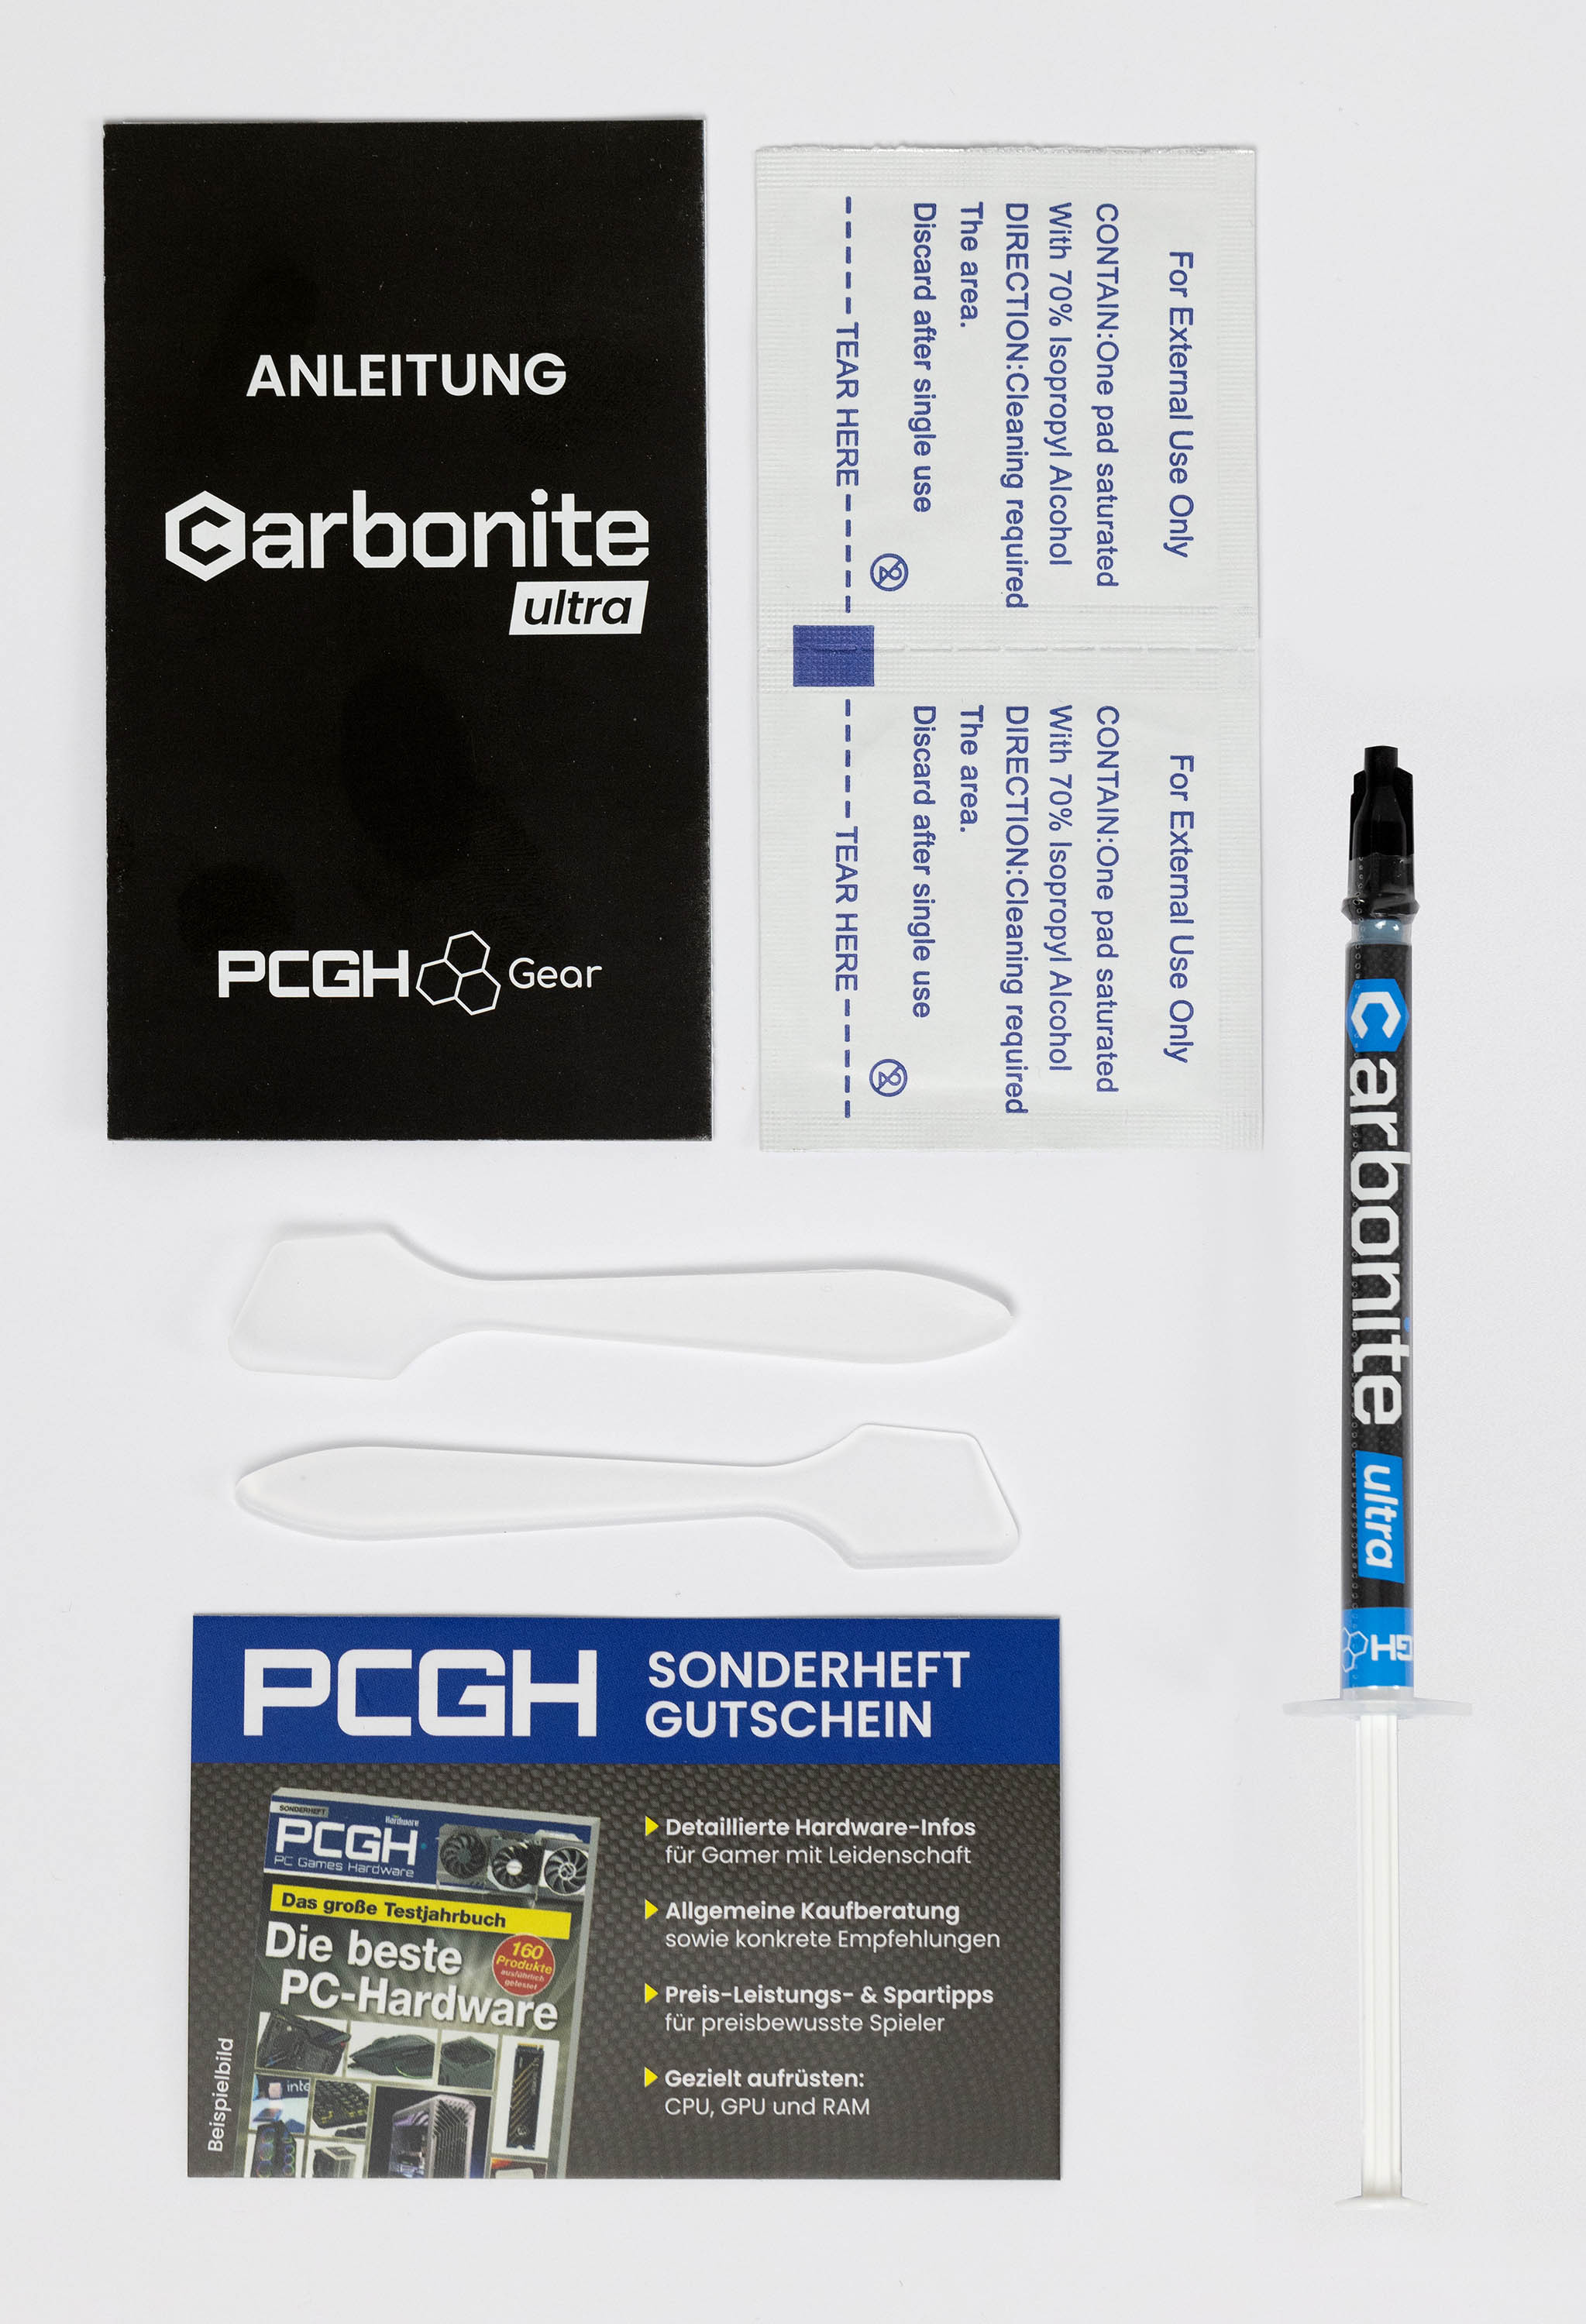 PCGH-Gear Carbonite Ultra (2g)